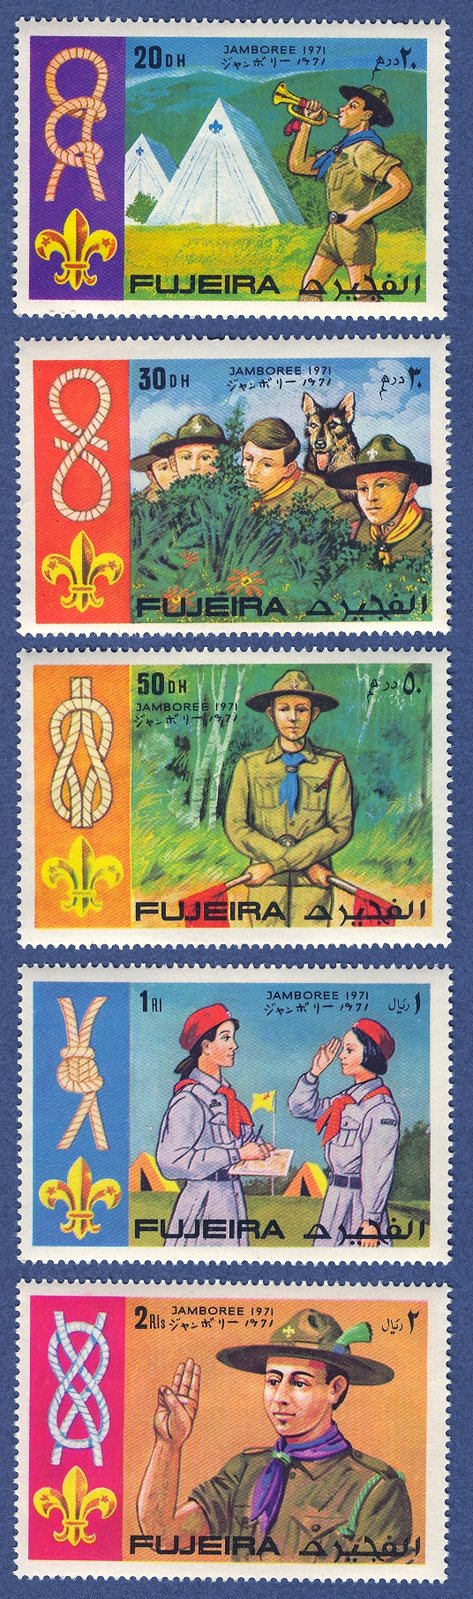 [Scouts+EAU+Fujeira+1971.jpg]